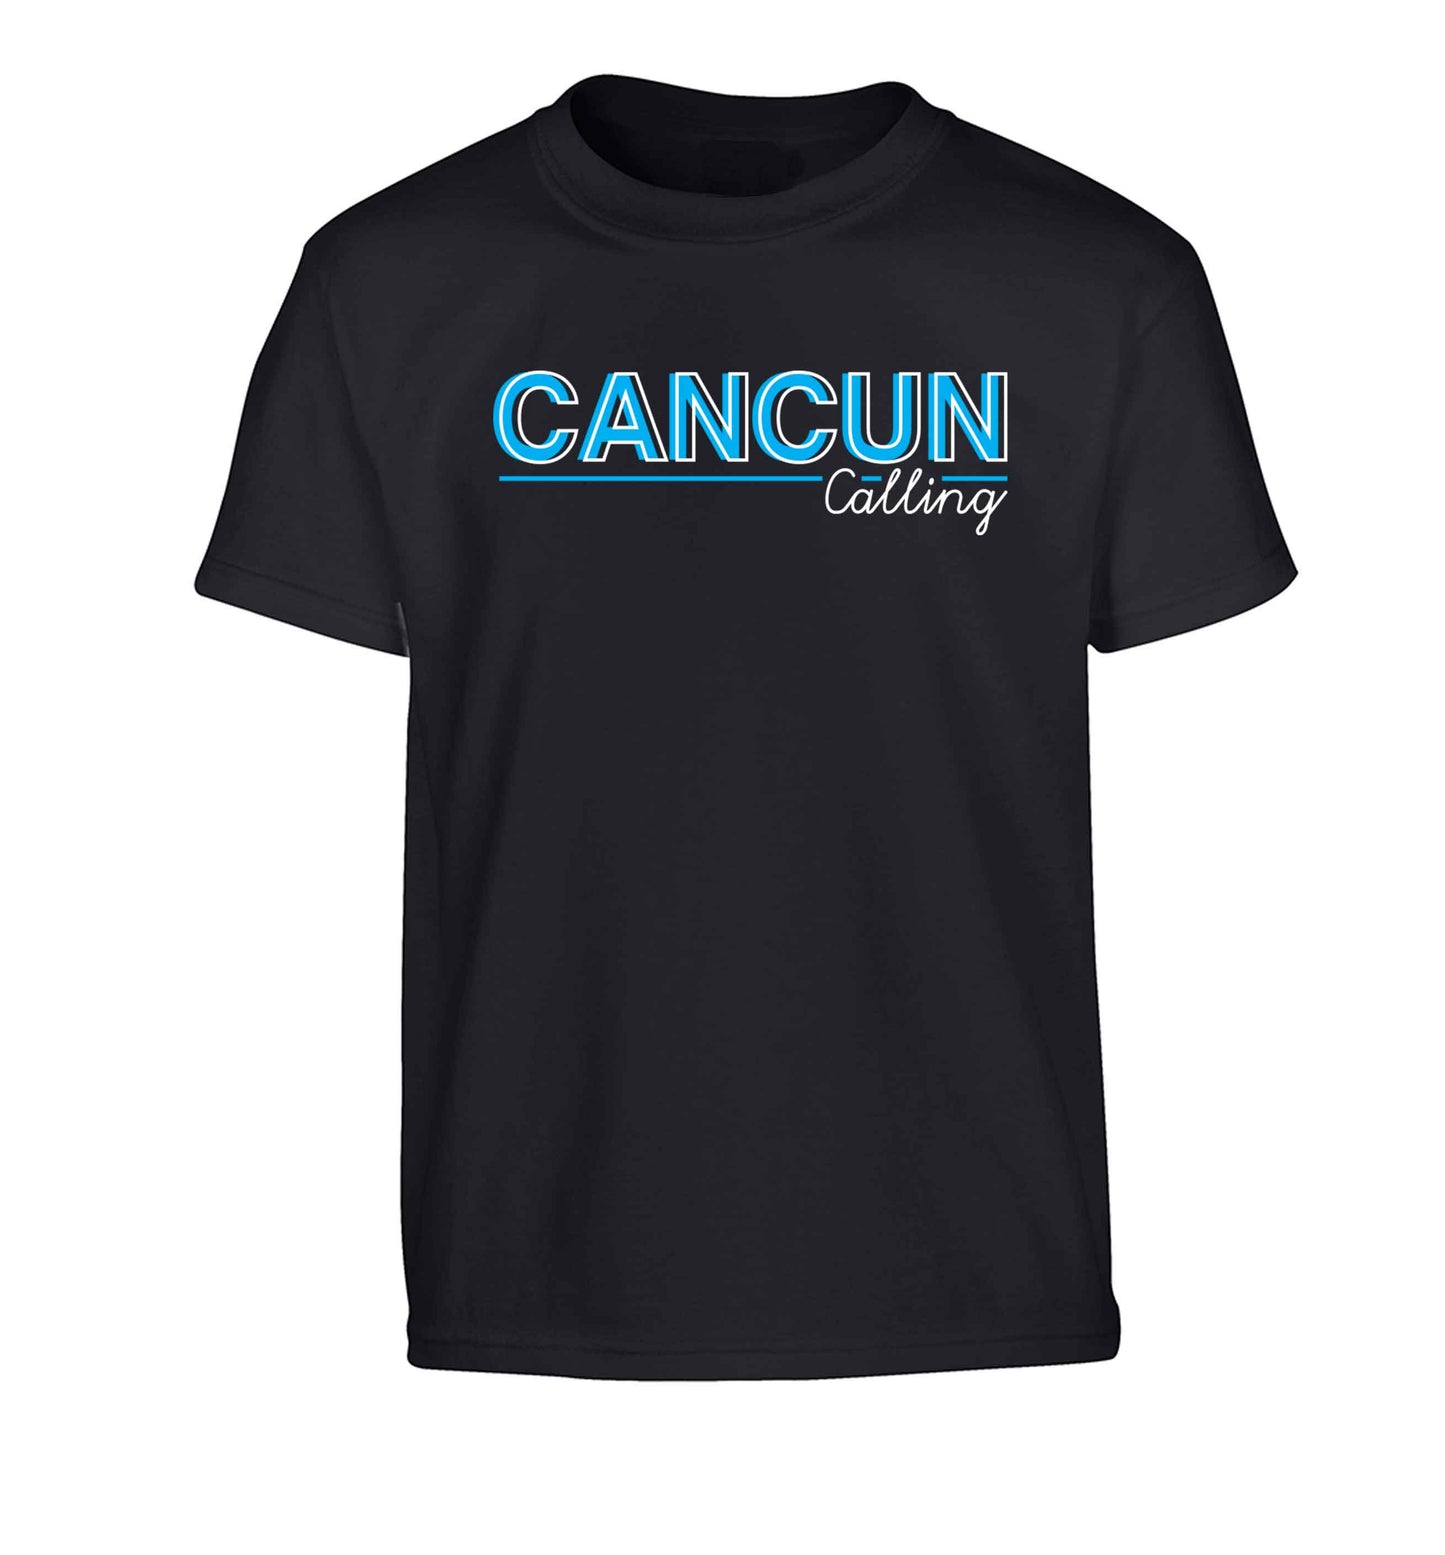 Cancun calling Children's black Tshirt 12-13 Years